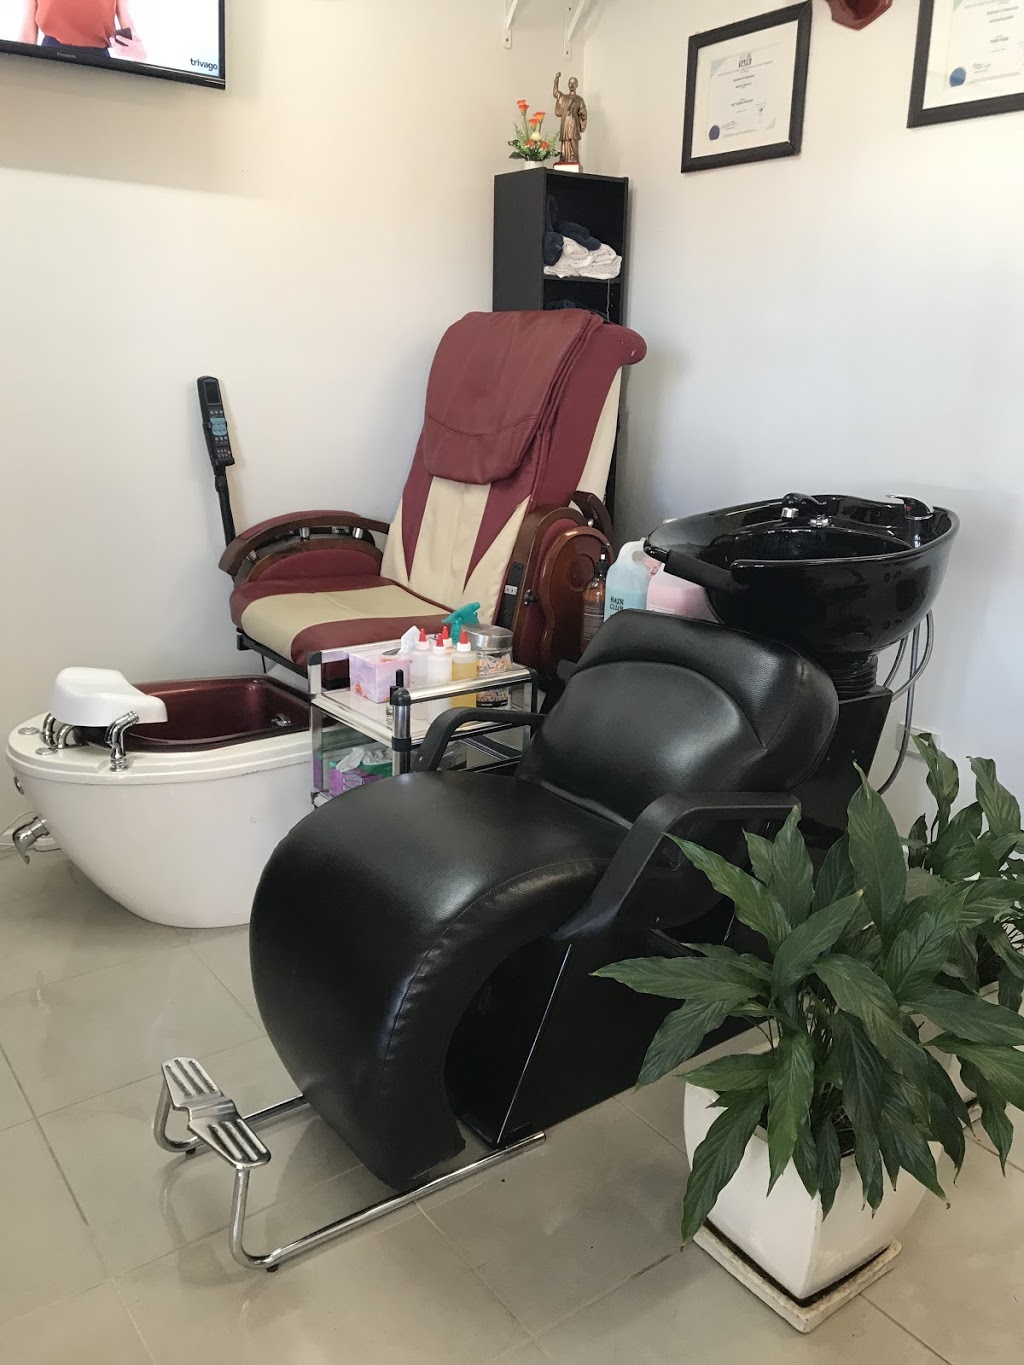 Cathy & Vince Hair and Beauty Salon | hair care | 41 Harden St, Canley Heights NSW 2166, Australia | 0297292501 OR +61 2 9729 2501